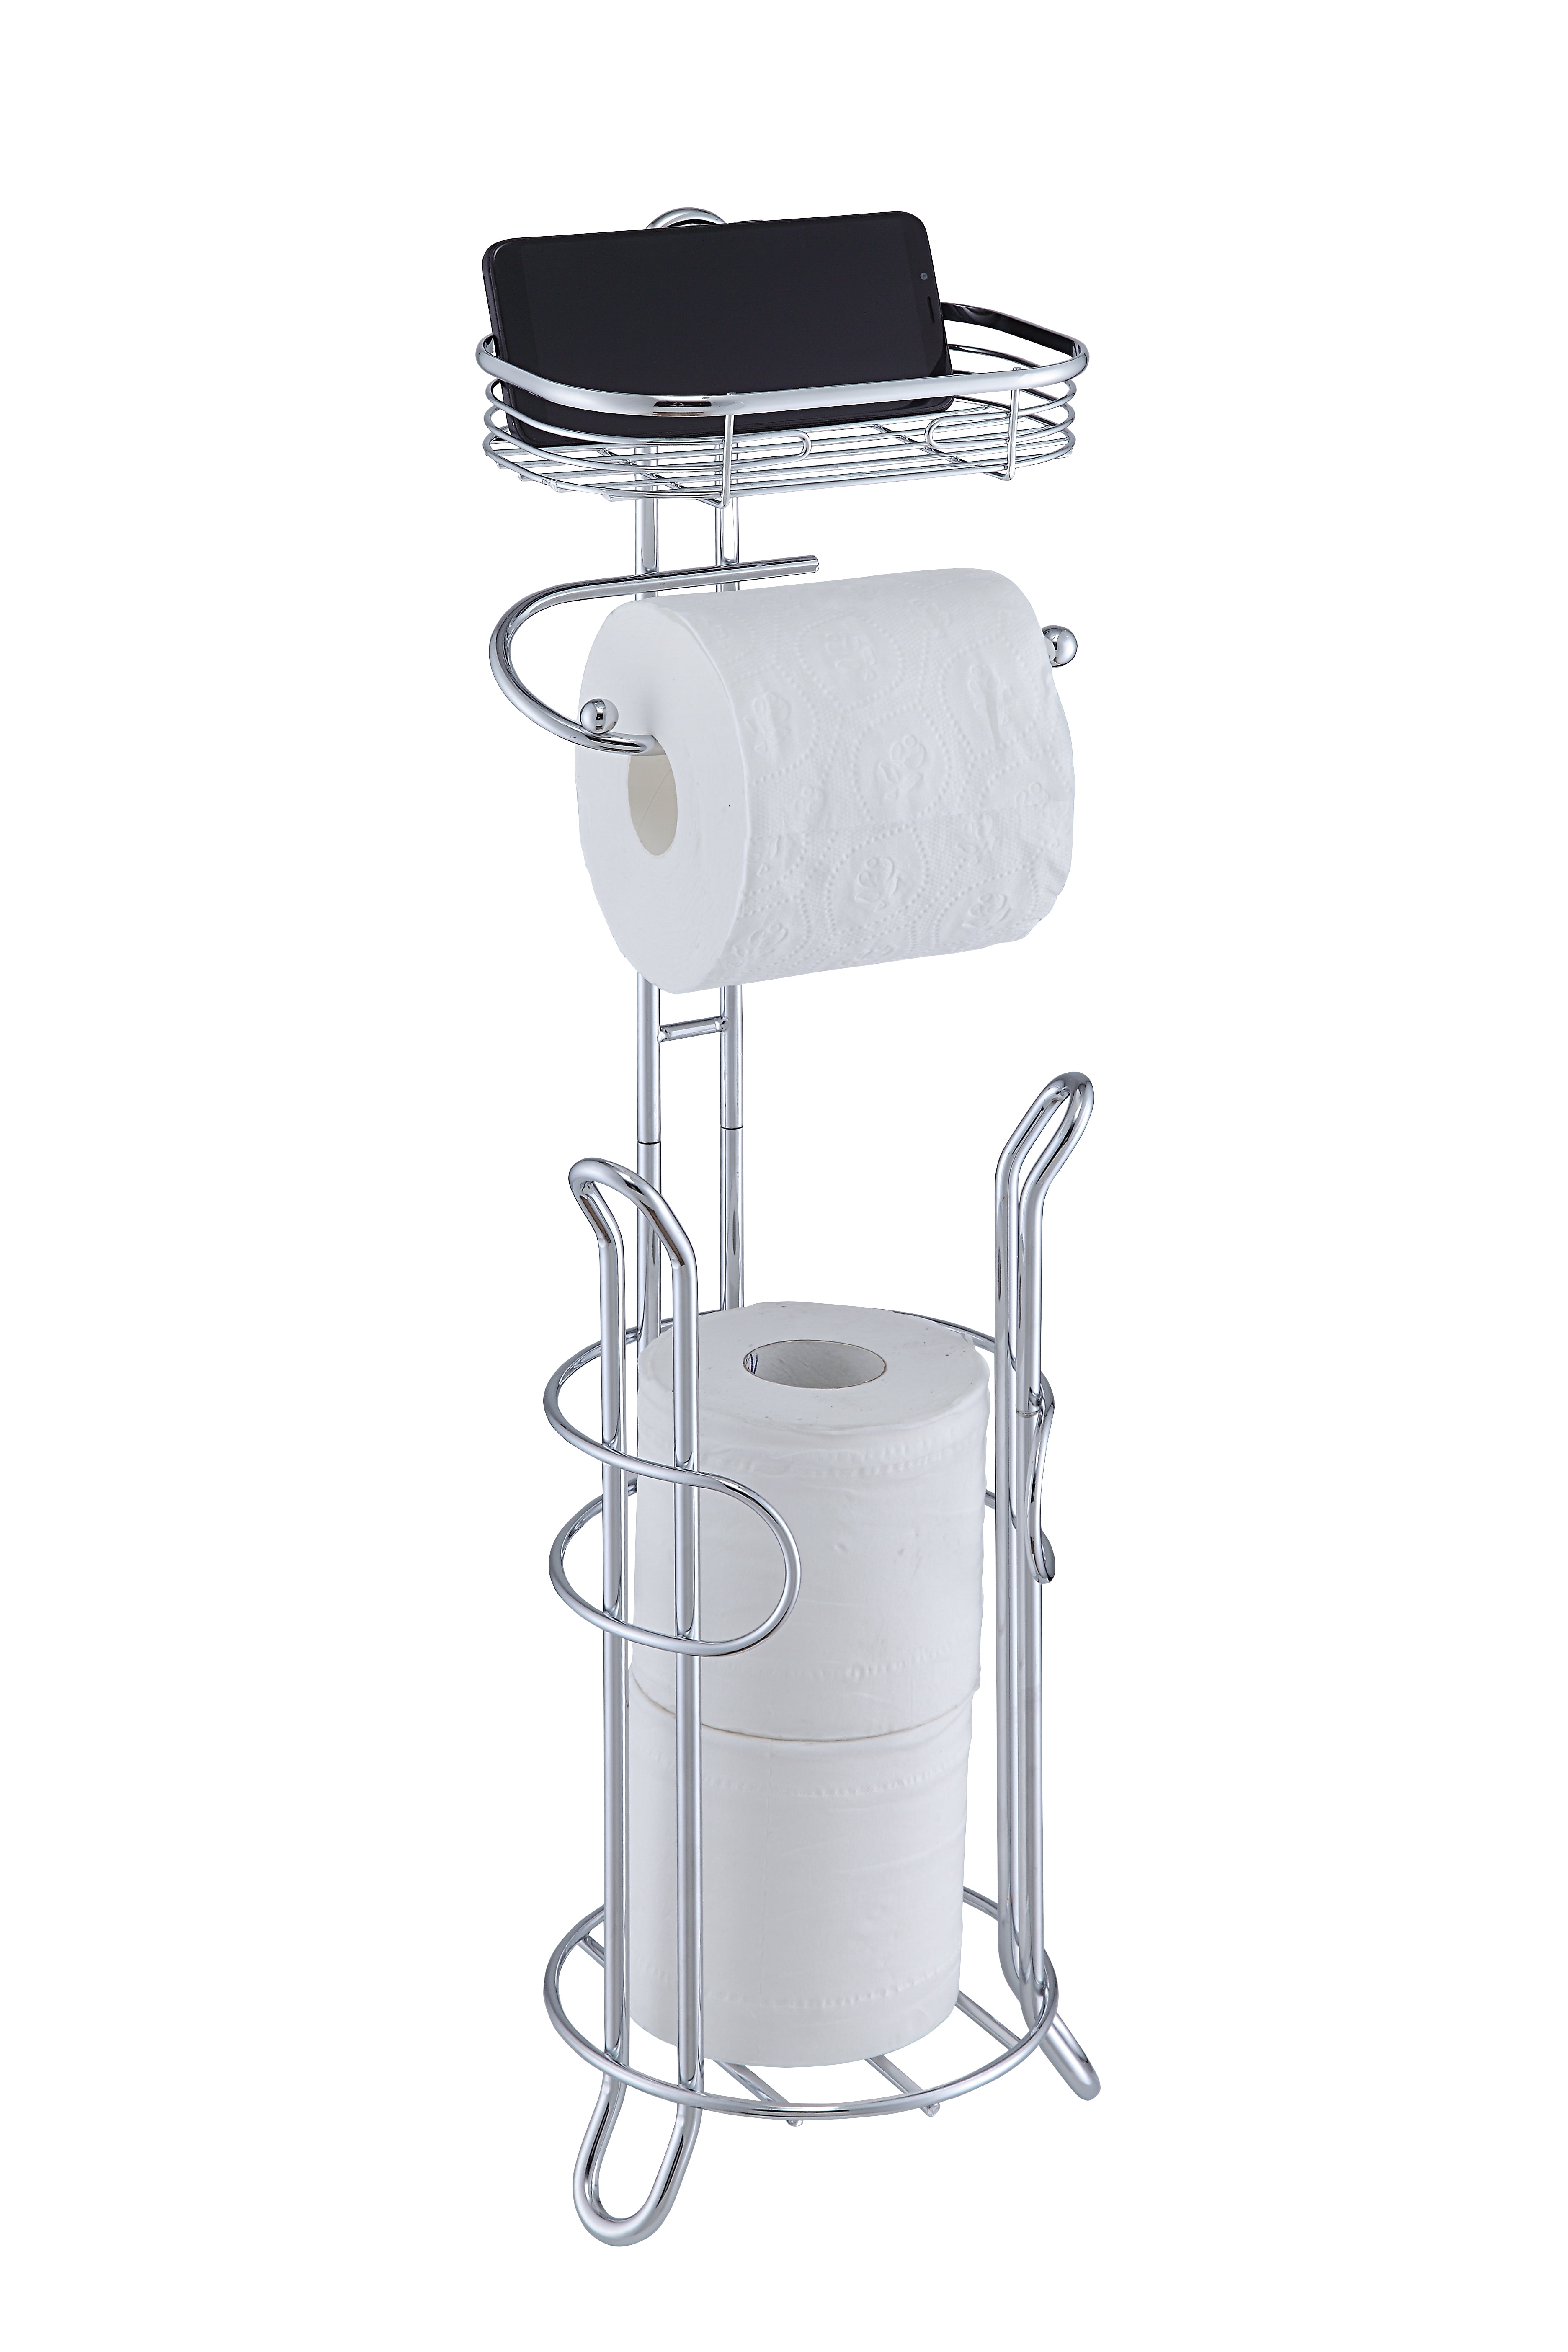 TreeLen Toilet Paper Holder Stand Toilet Tissue Roll Holder with Shelf for Bathroom Storage Holds Phone/ Wipe/ Mega Rolls-Shiny